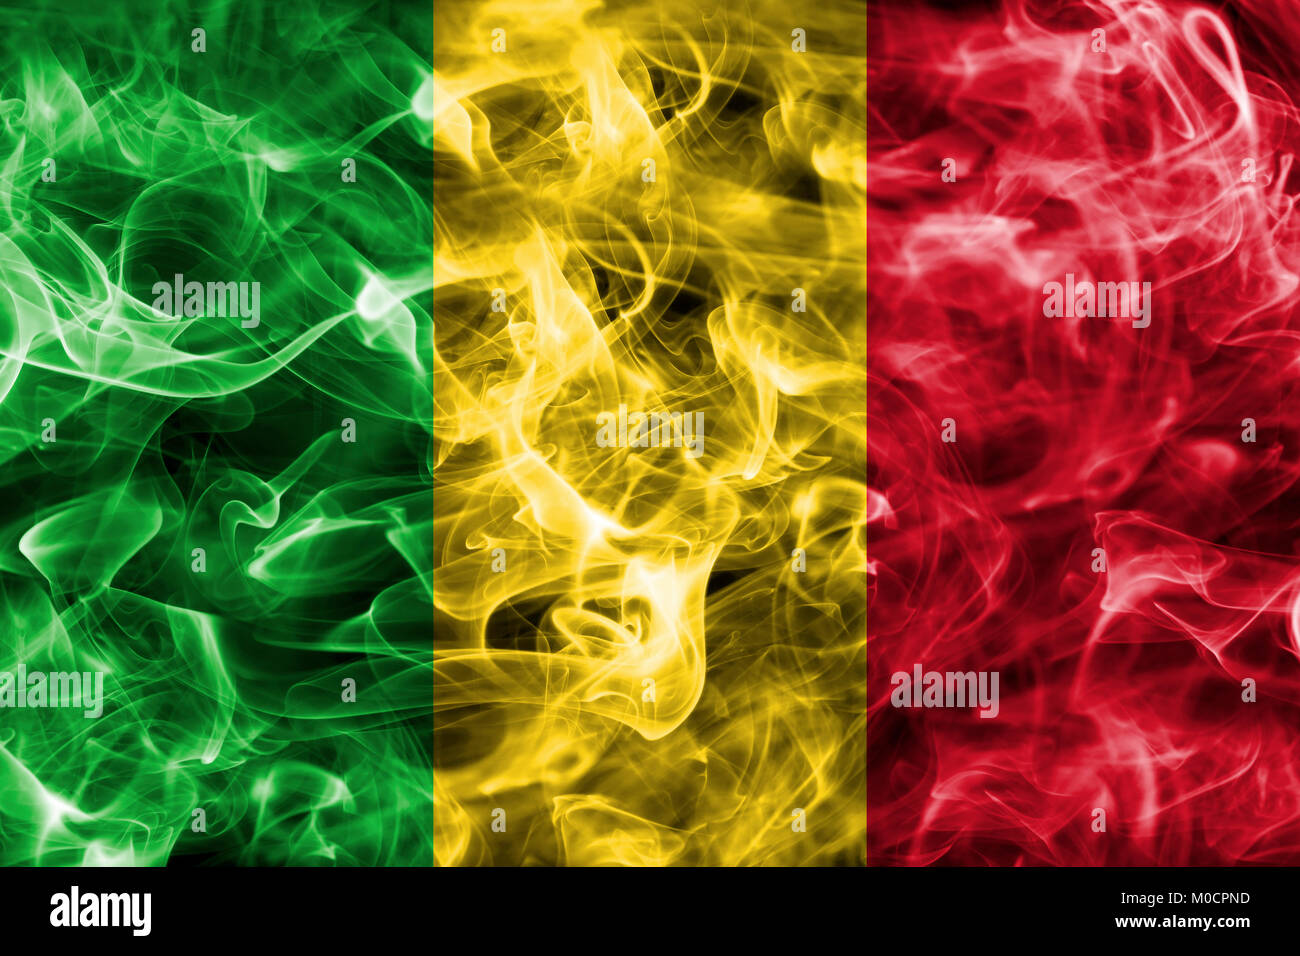 Mali smoke flag Stock Photo 172384953 Alamy